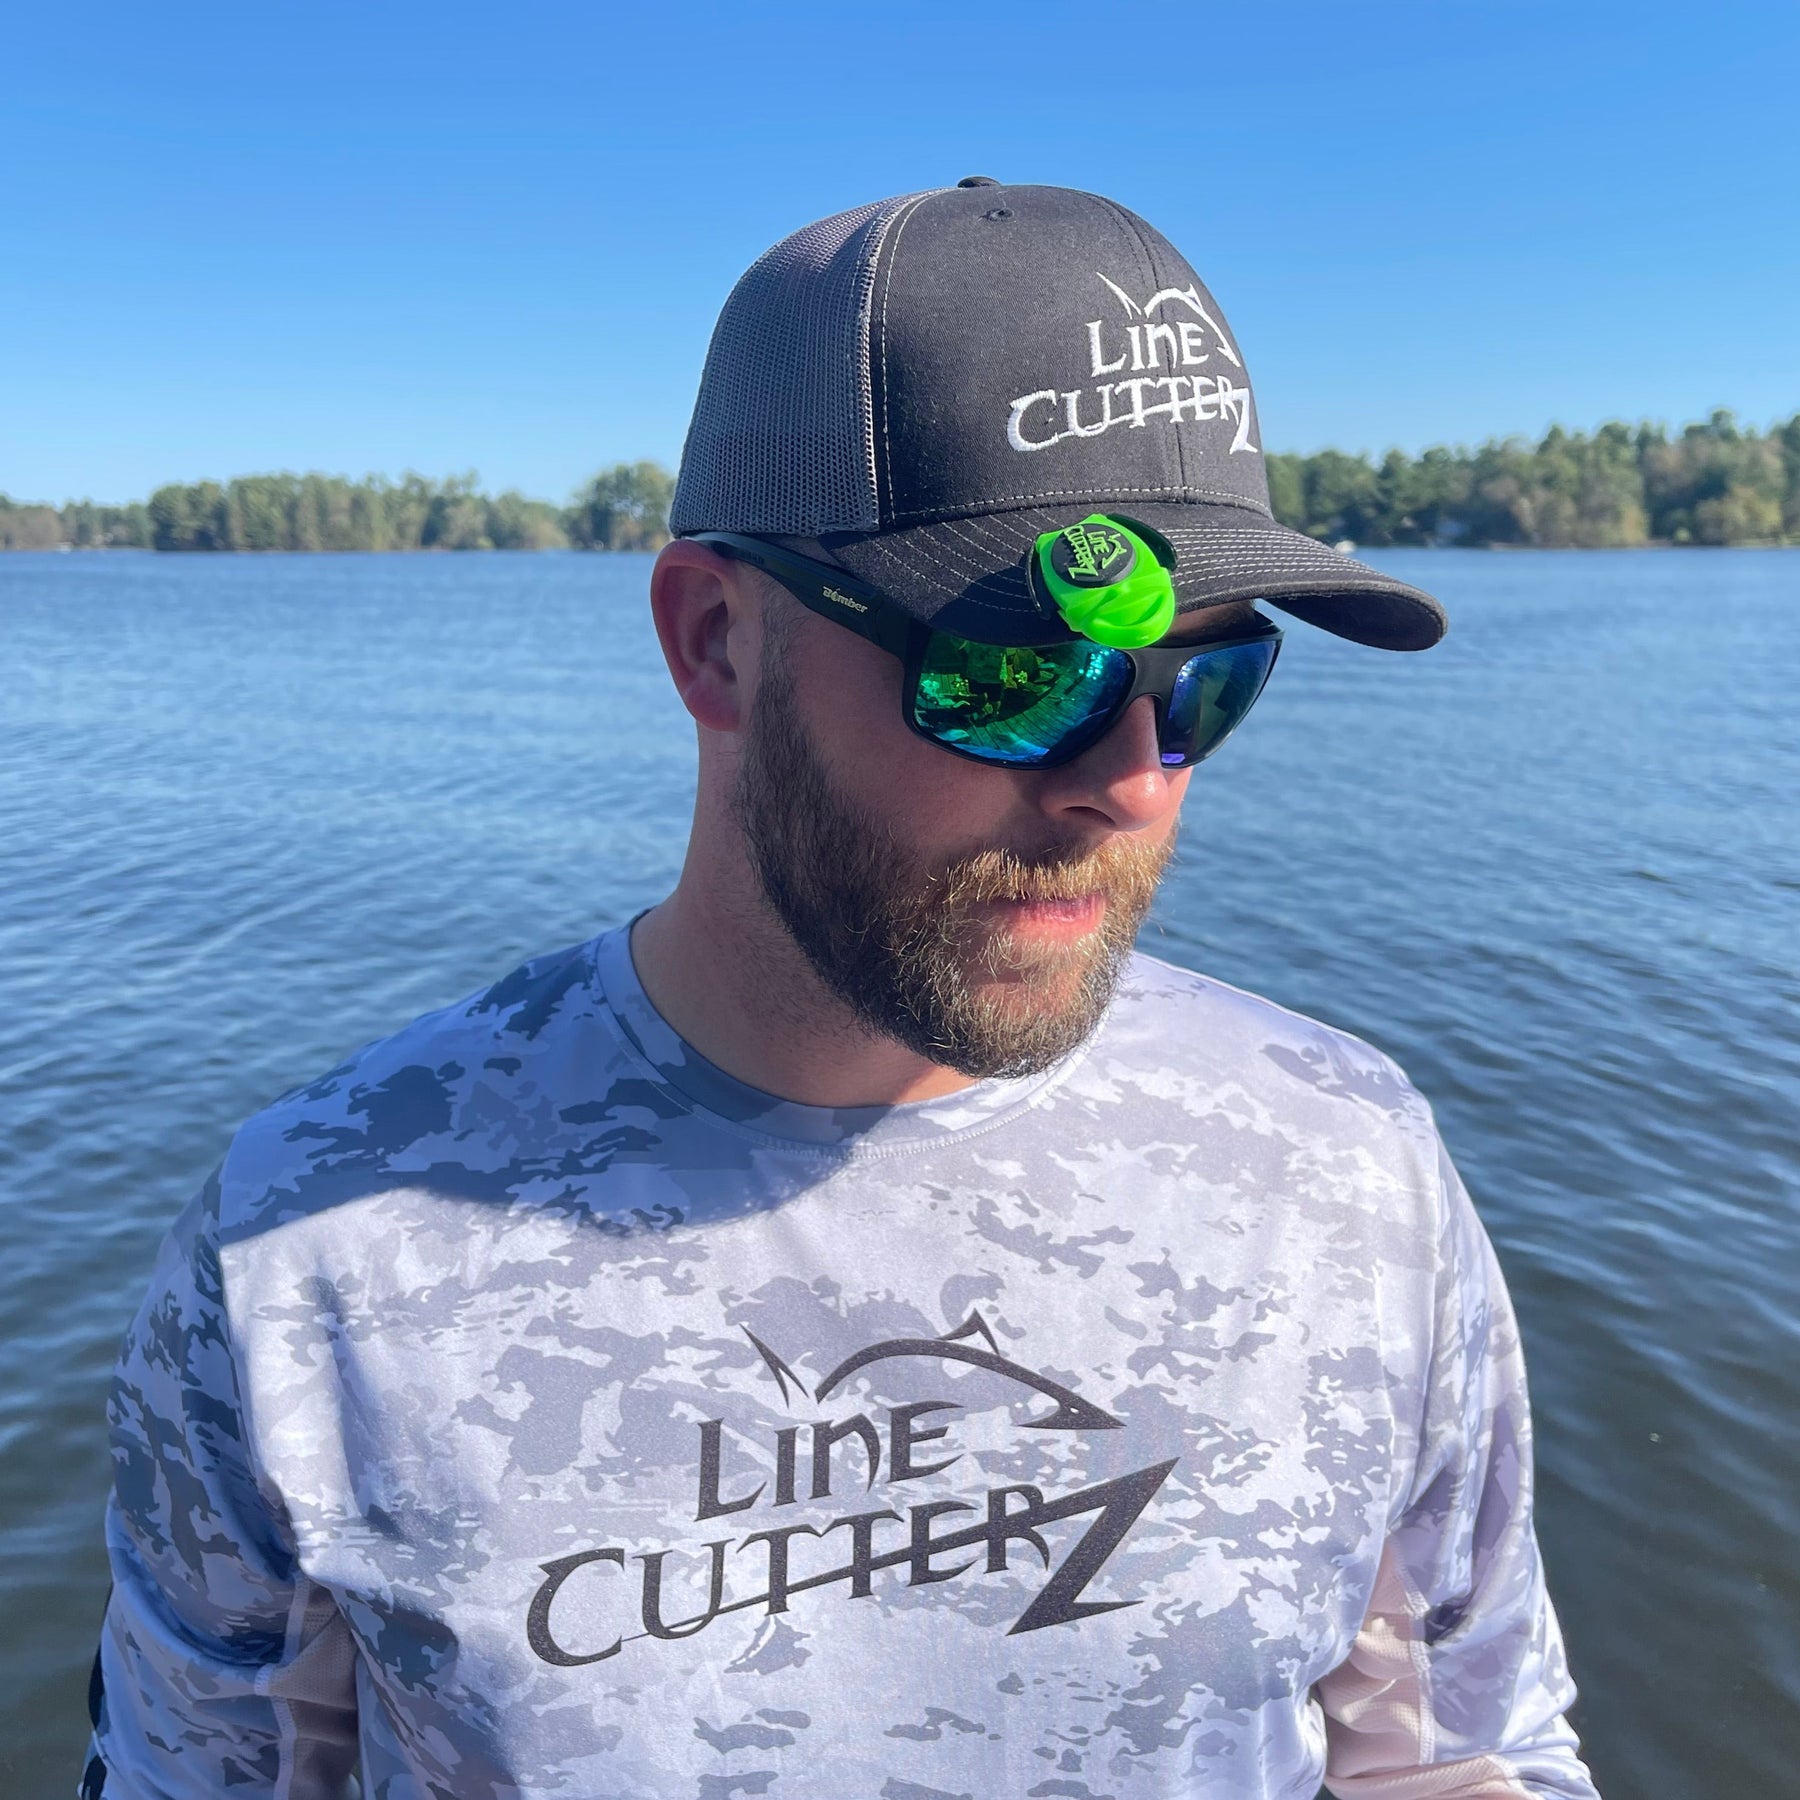 Line Cutterz - Official (@line_cutterz) • Instagram photos and videos